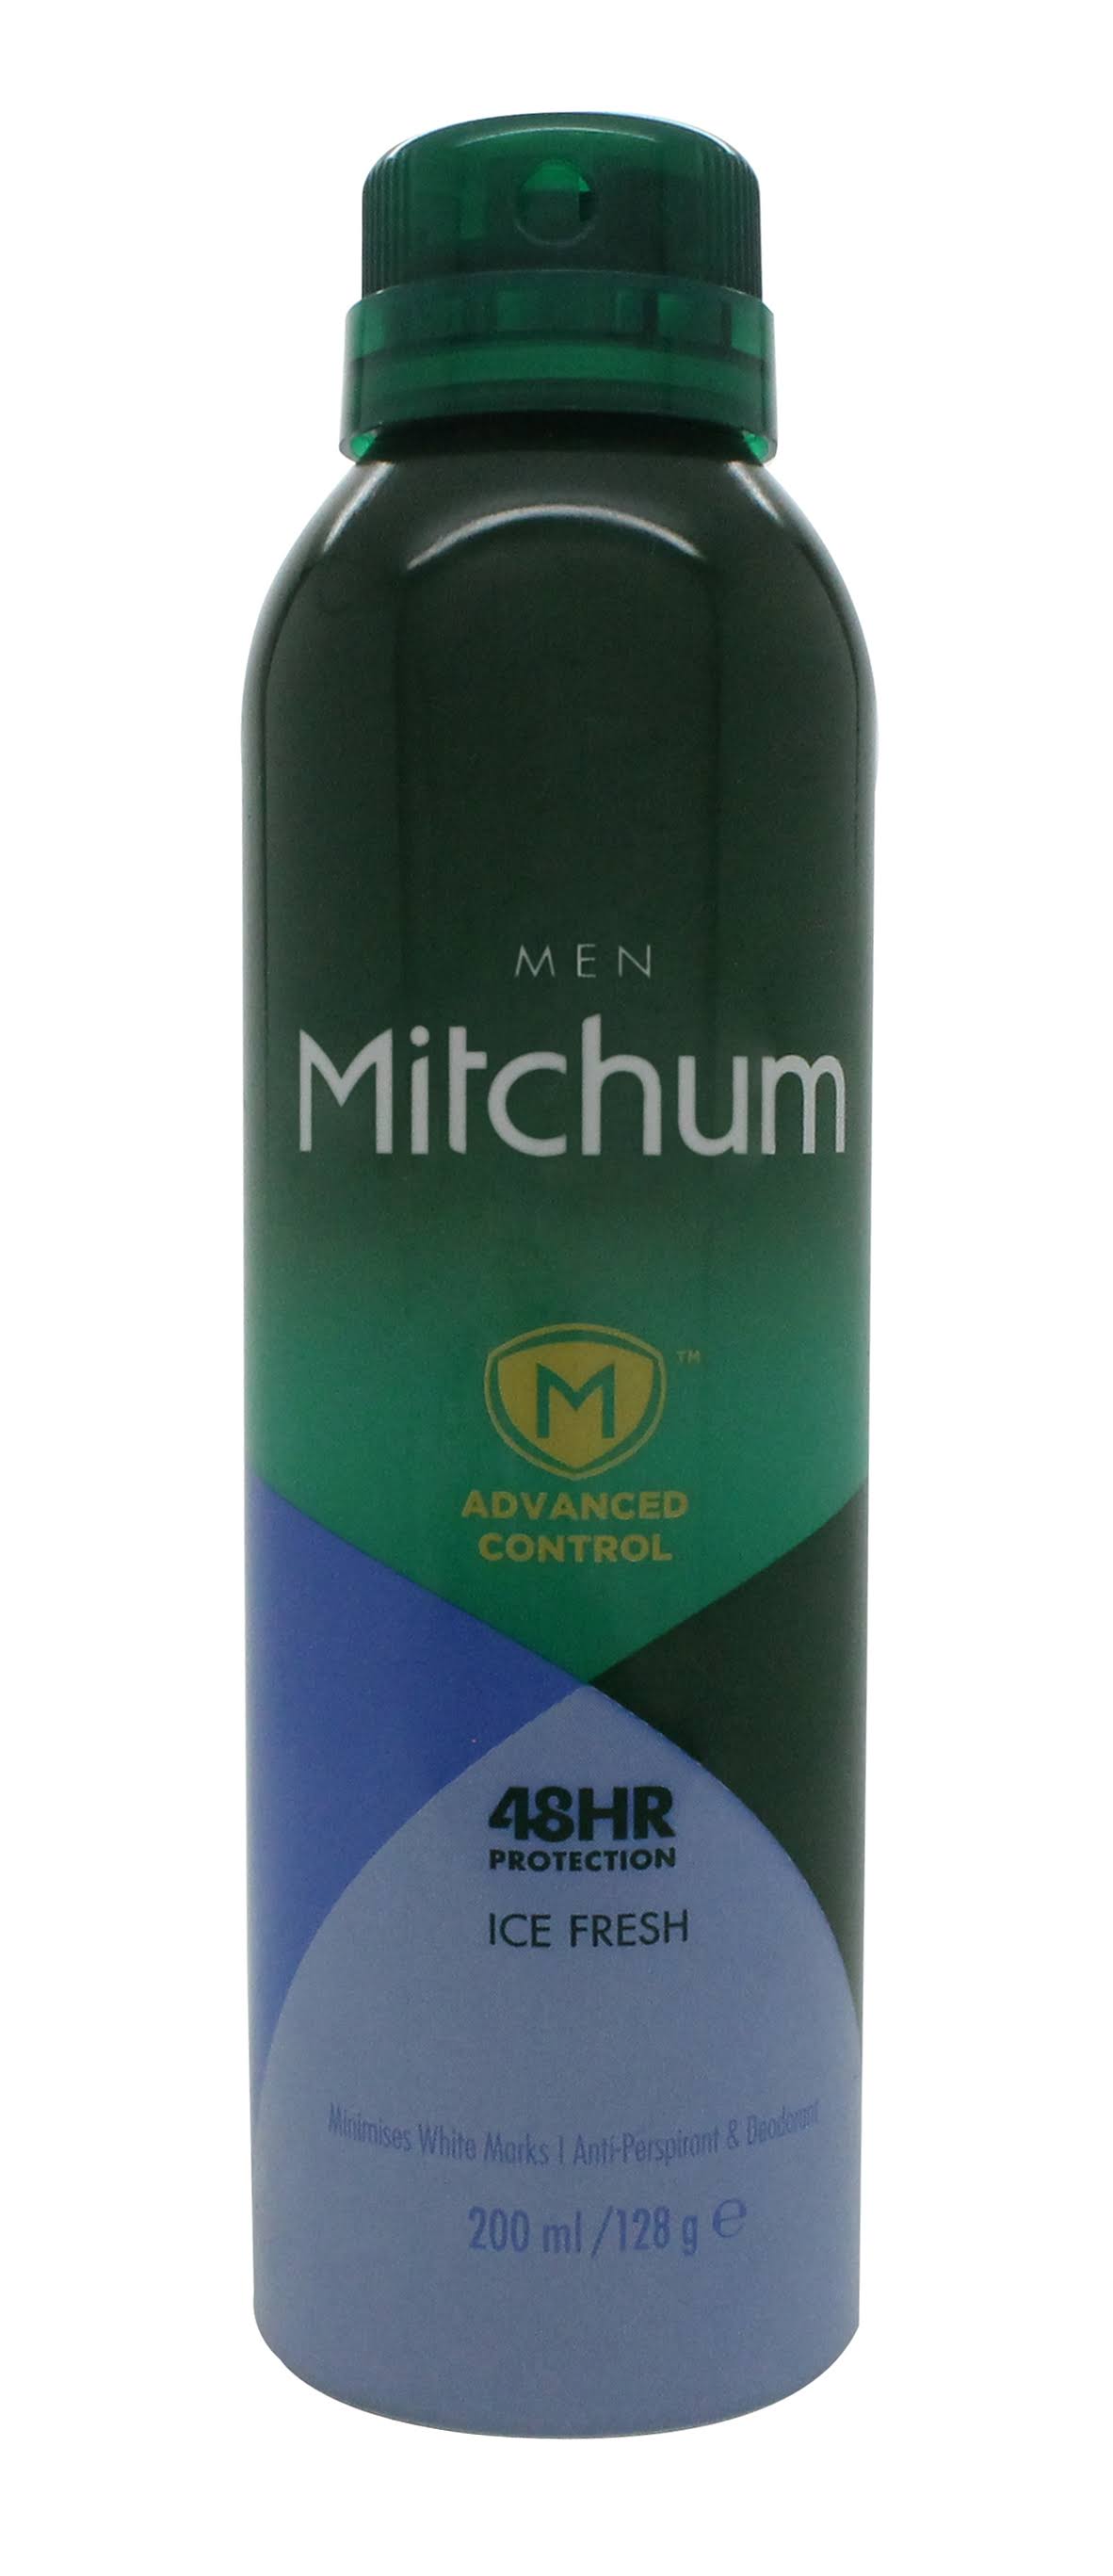 Mitchum Men Triple Odor Defense 48hr Protection Antiperspirant and Deodorant - Ice Fresh, 200ml